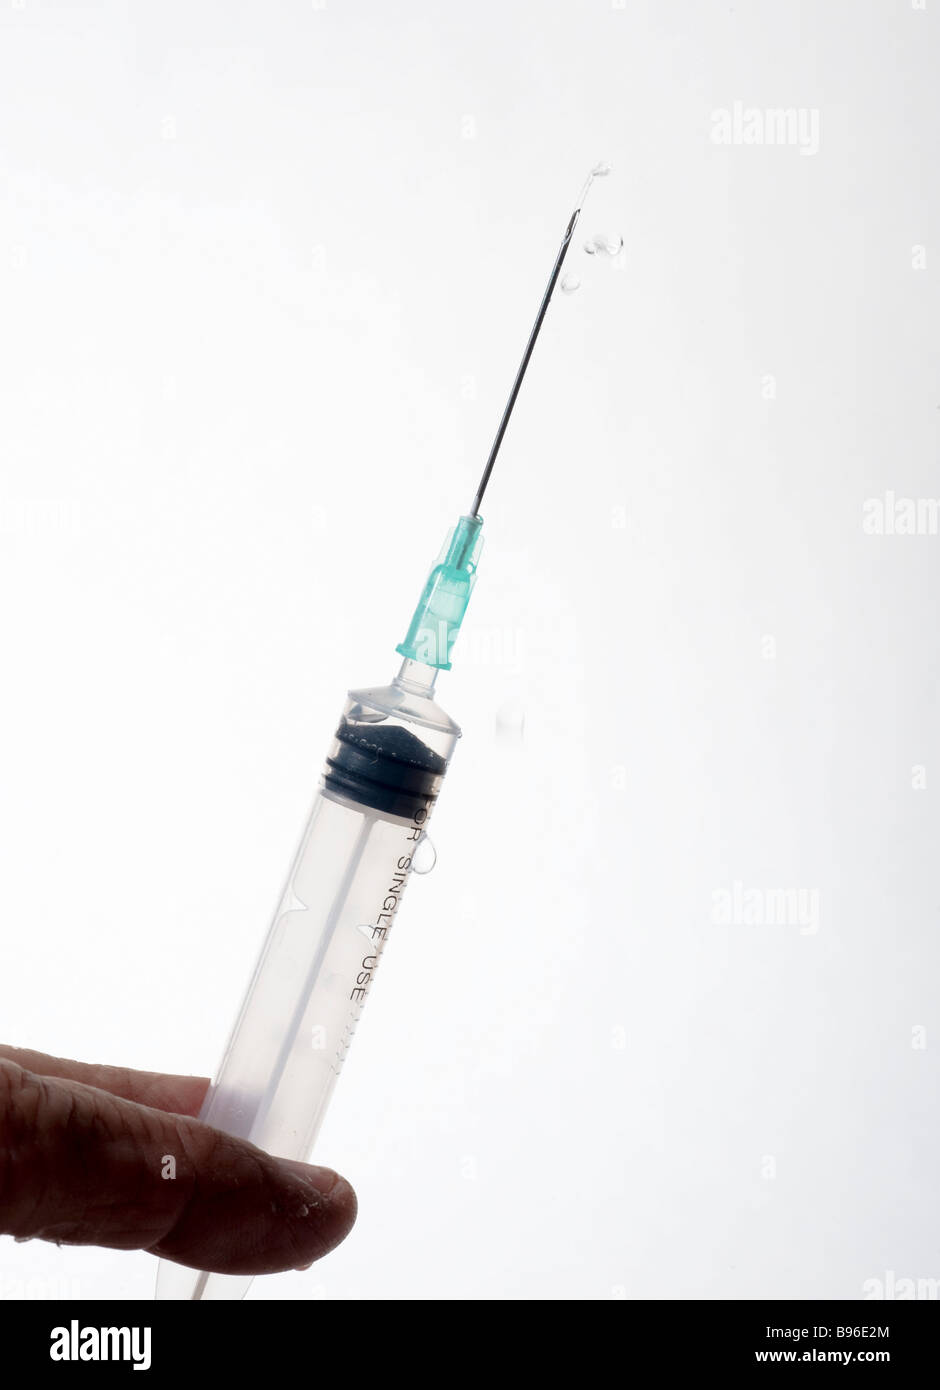 A medical Syringe and hypodermic needle on white background Stock Photo